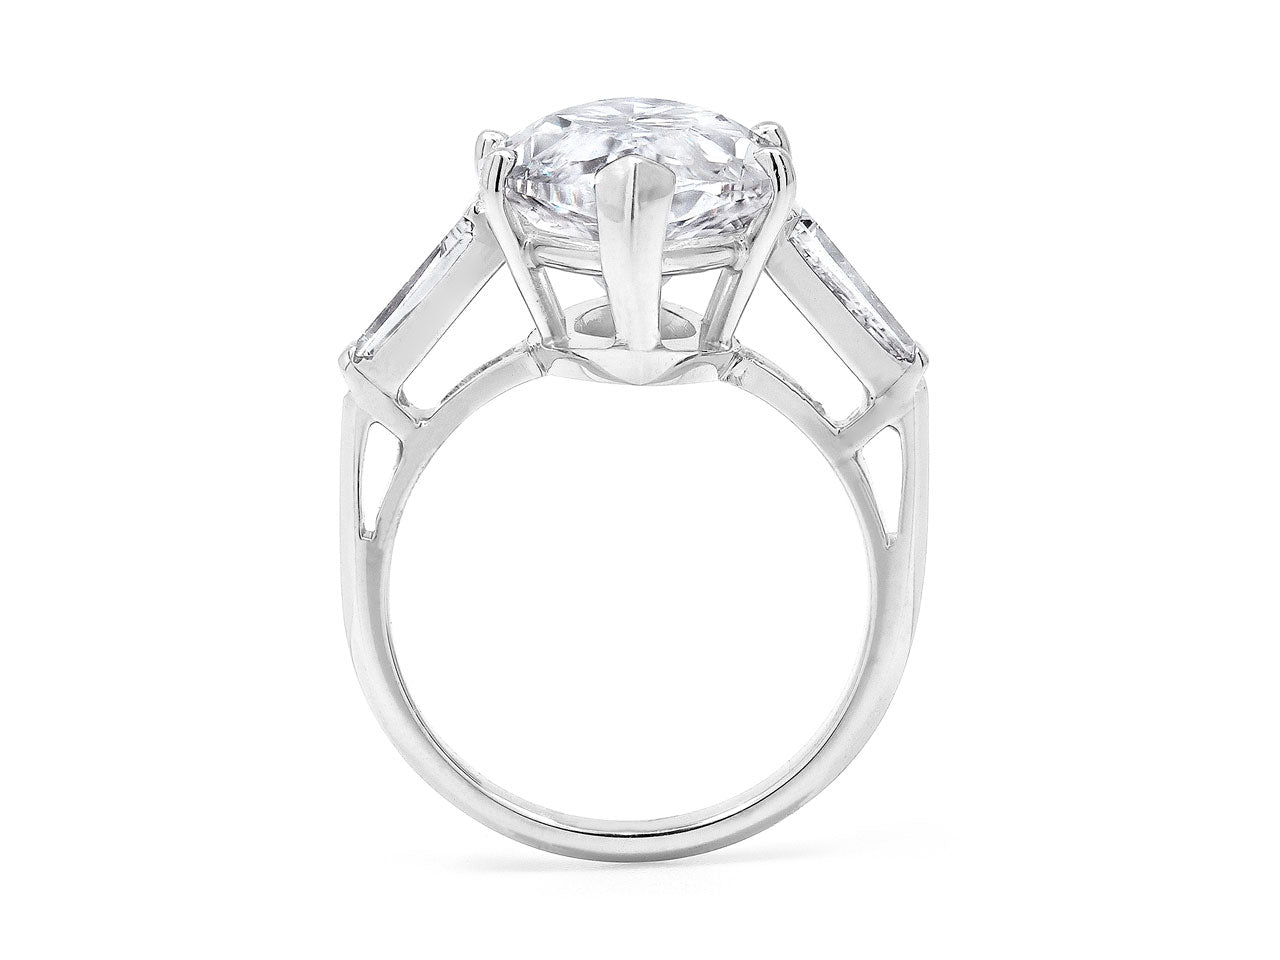 Van Cleef & Arpels Marquise Diamond Ring, 10.18 Carats D/IF, in Platinum